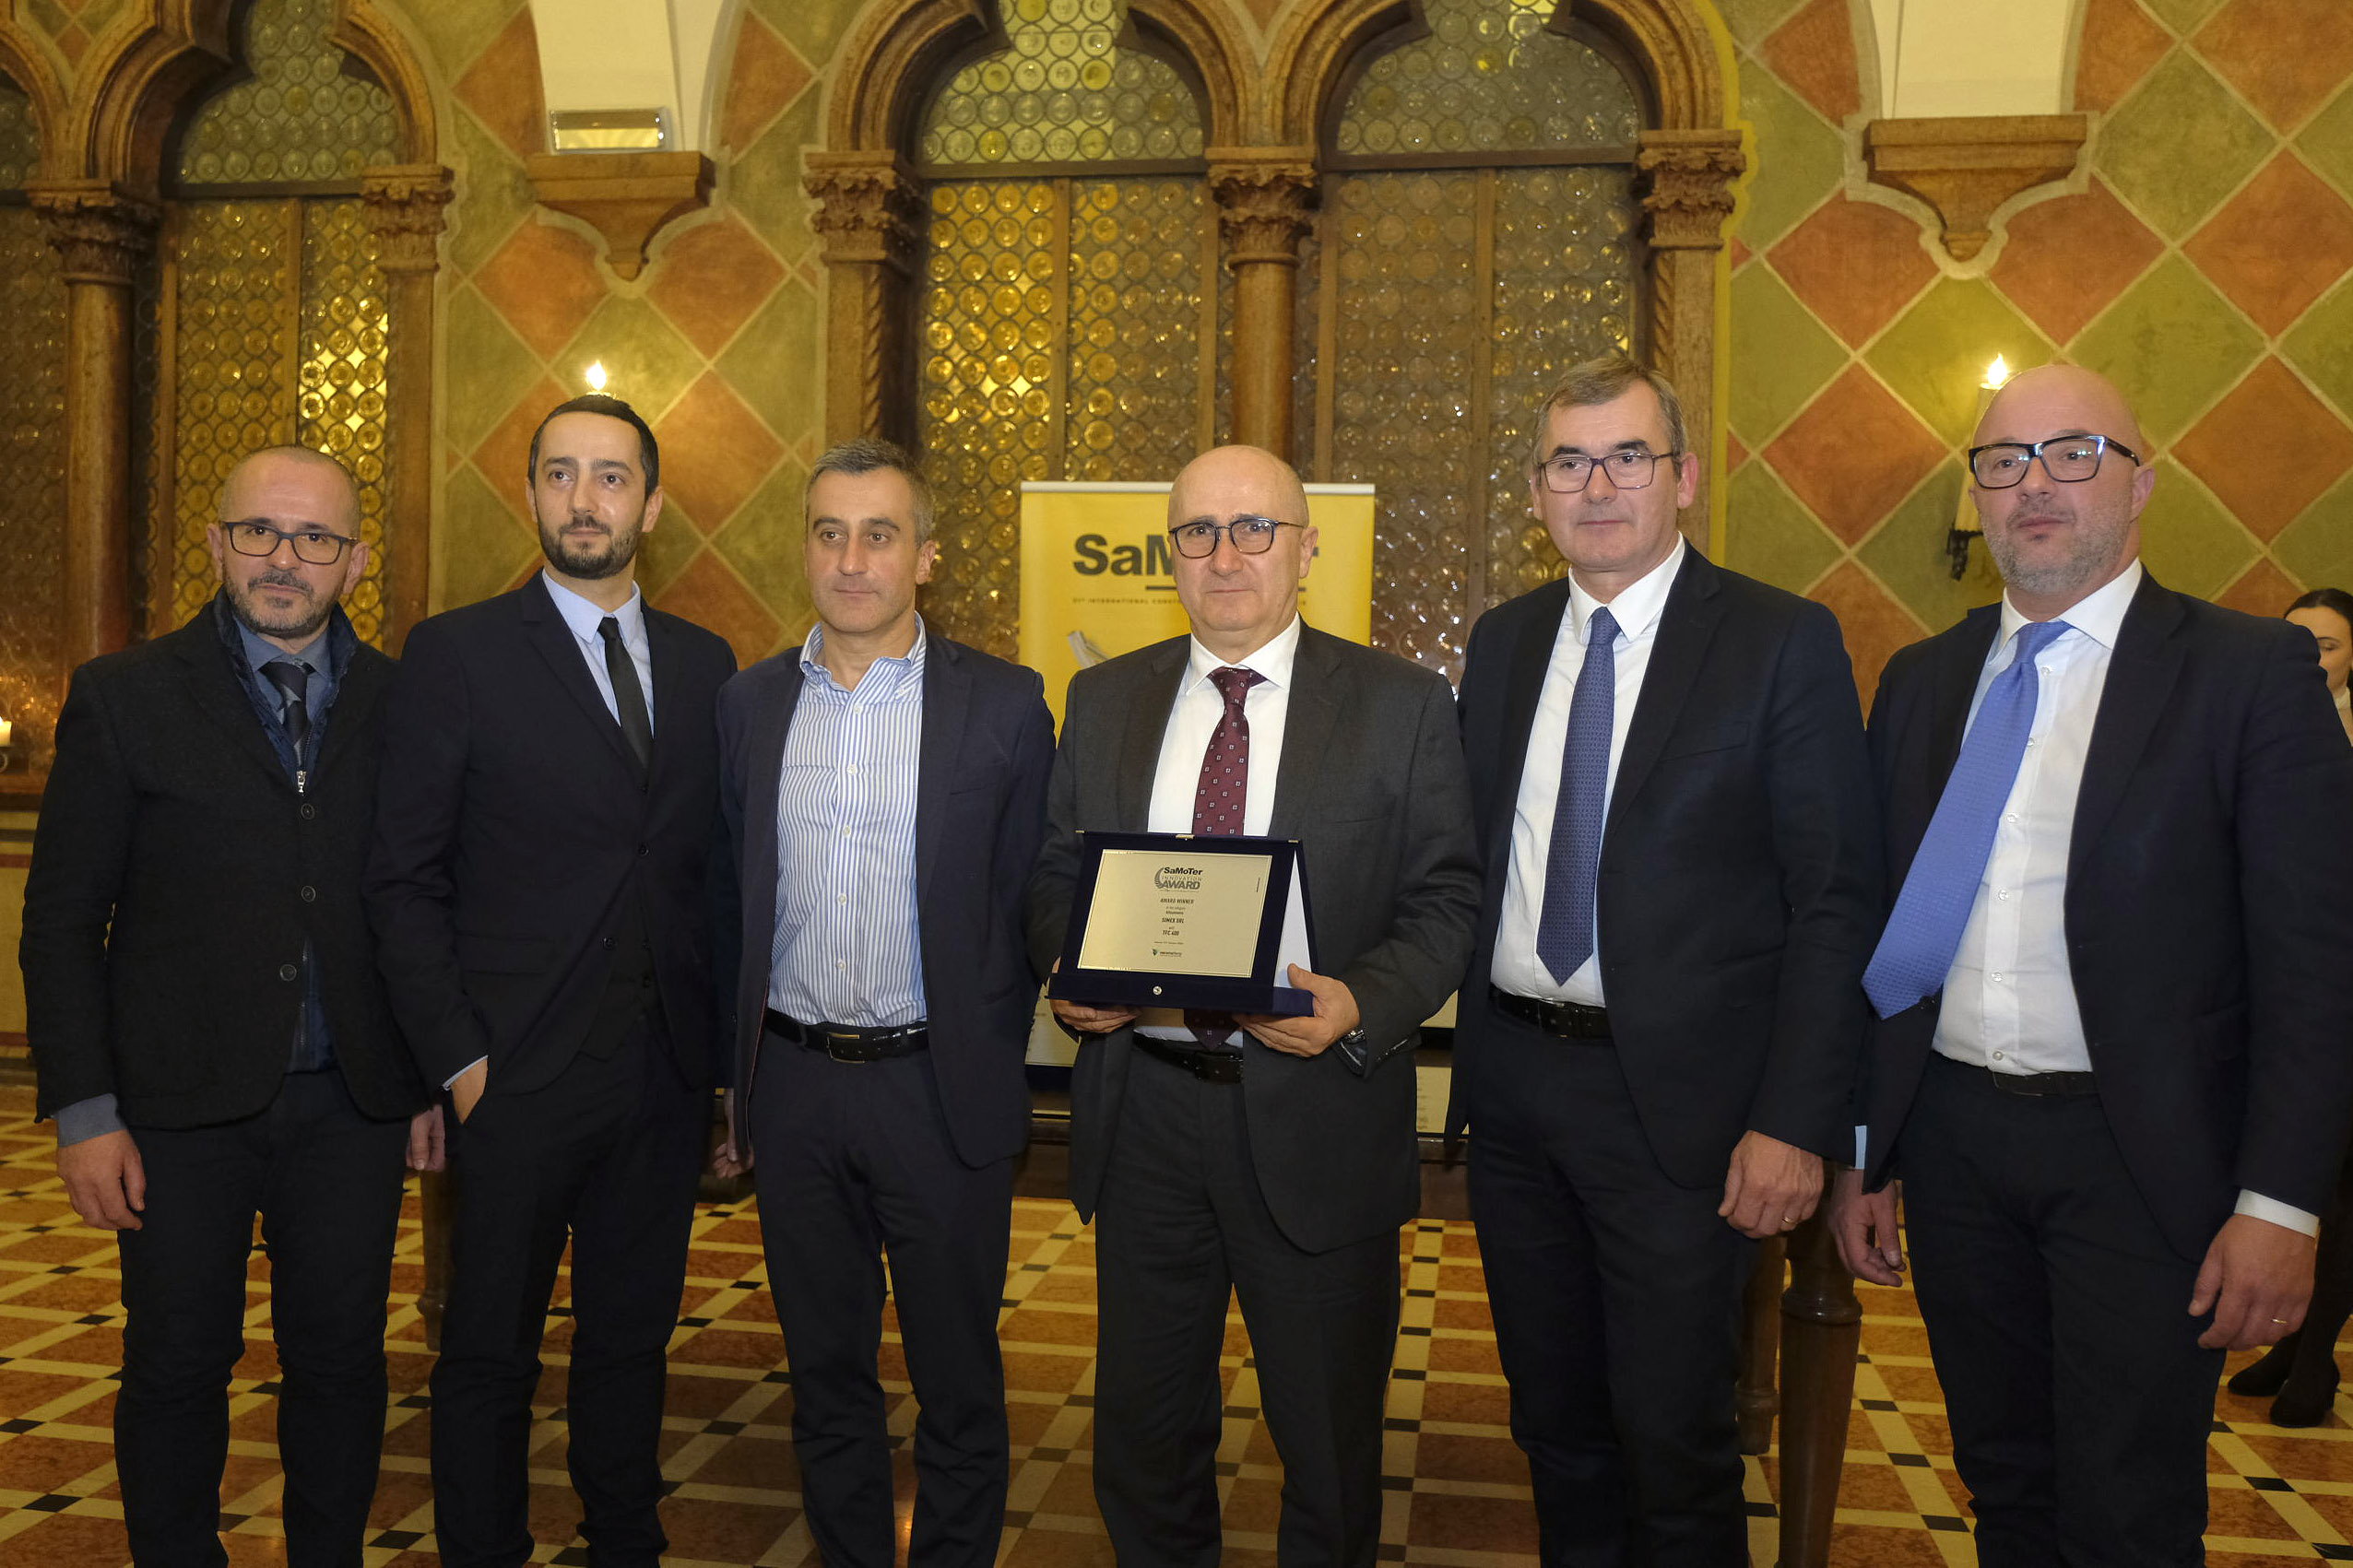 Simex wins the SaMoTer Innovation Award - Attachments category